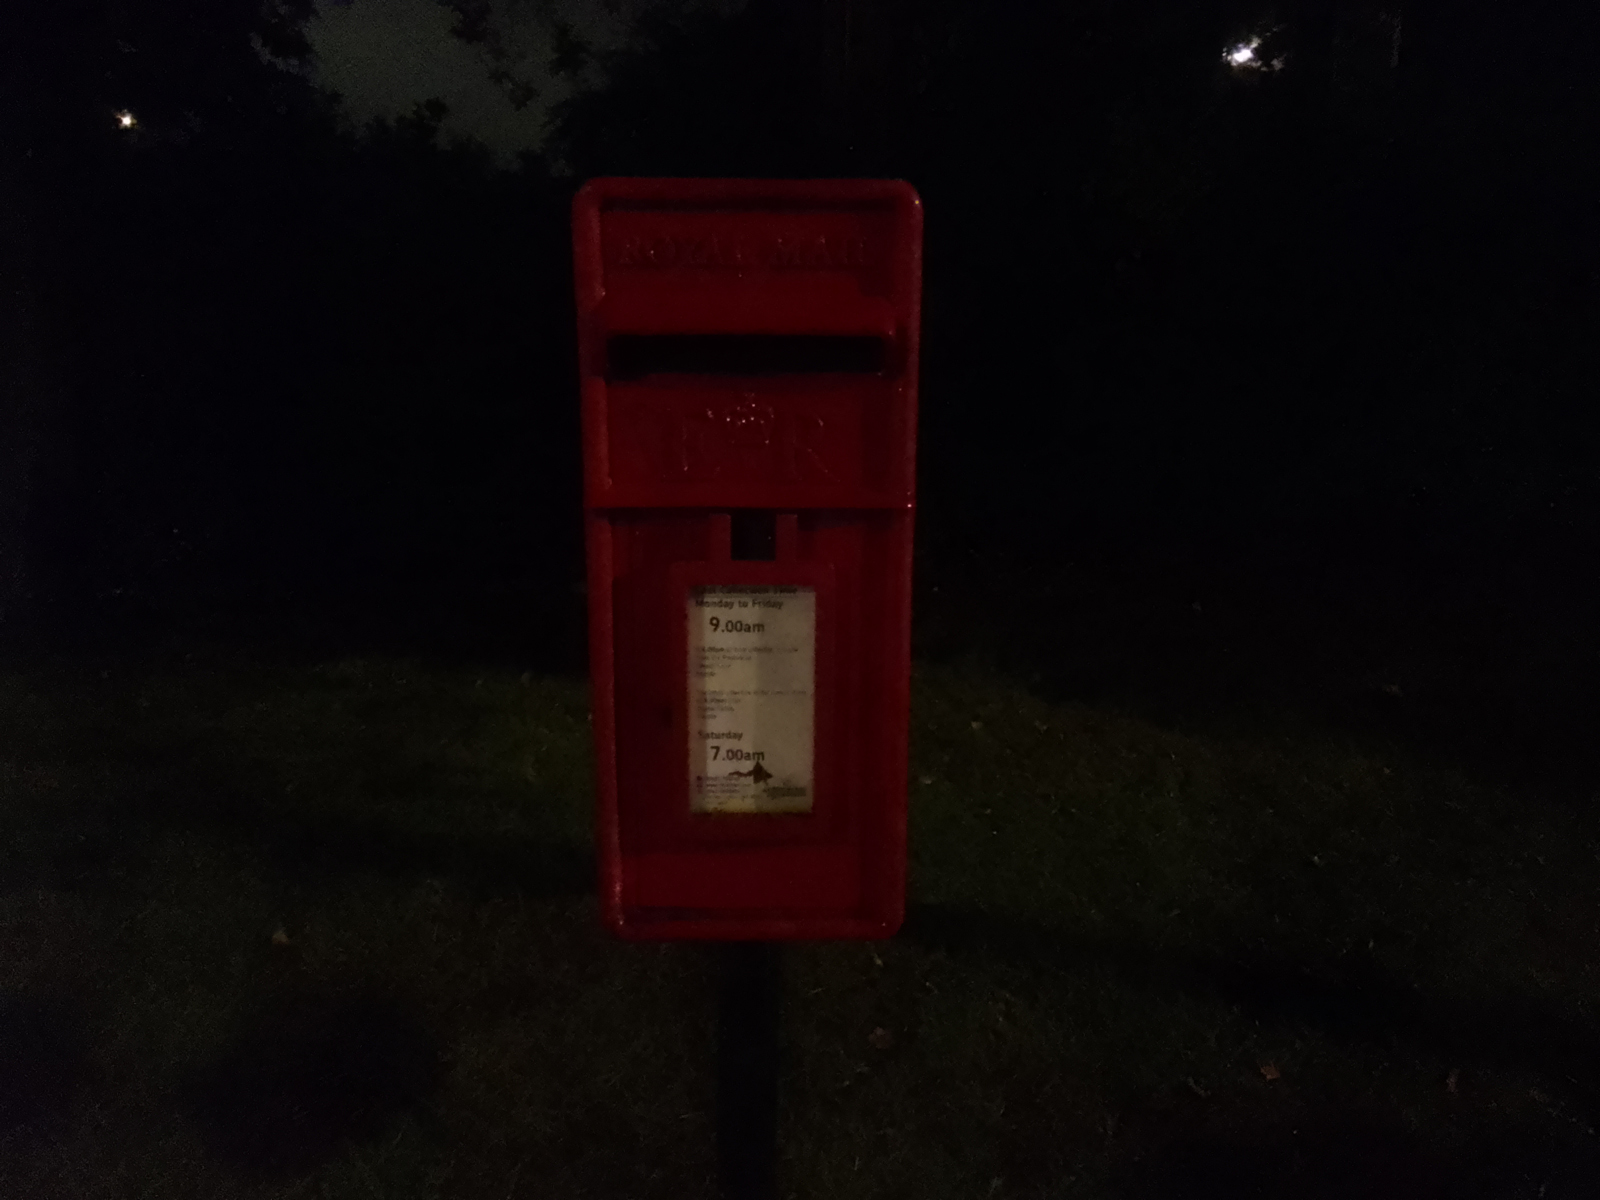 Nokia T10 camera sample showing a postbox at night